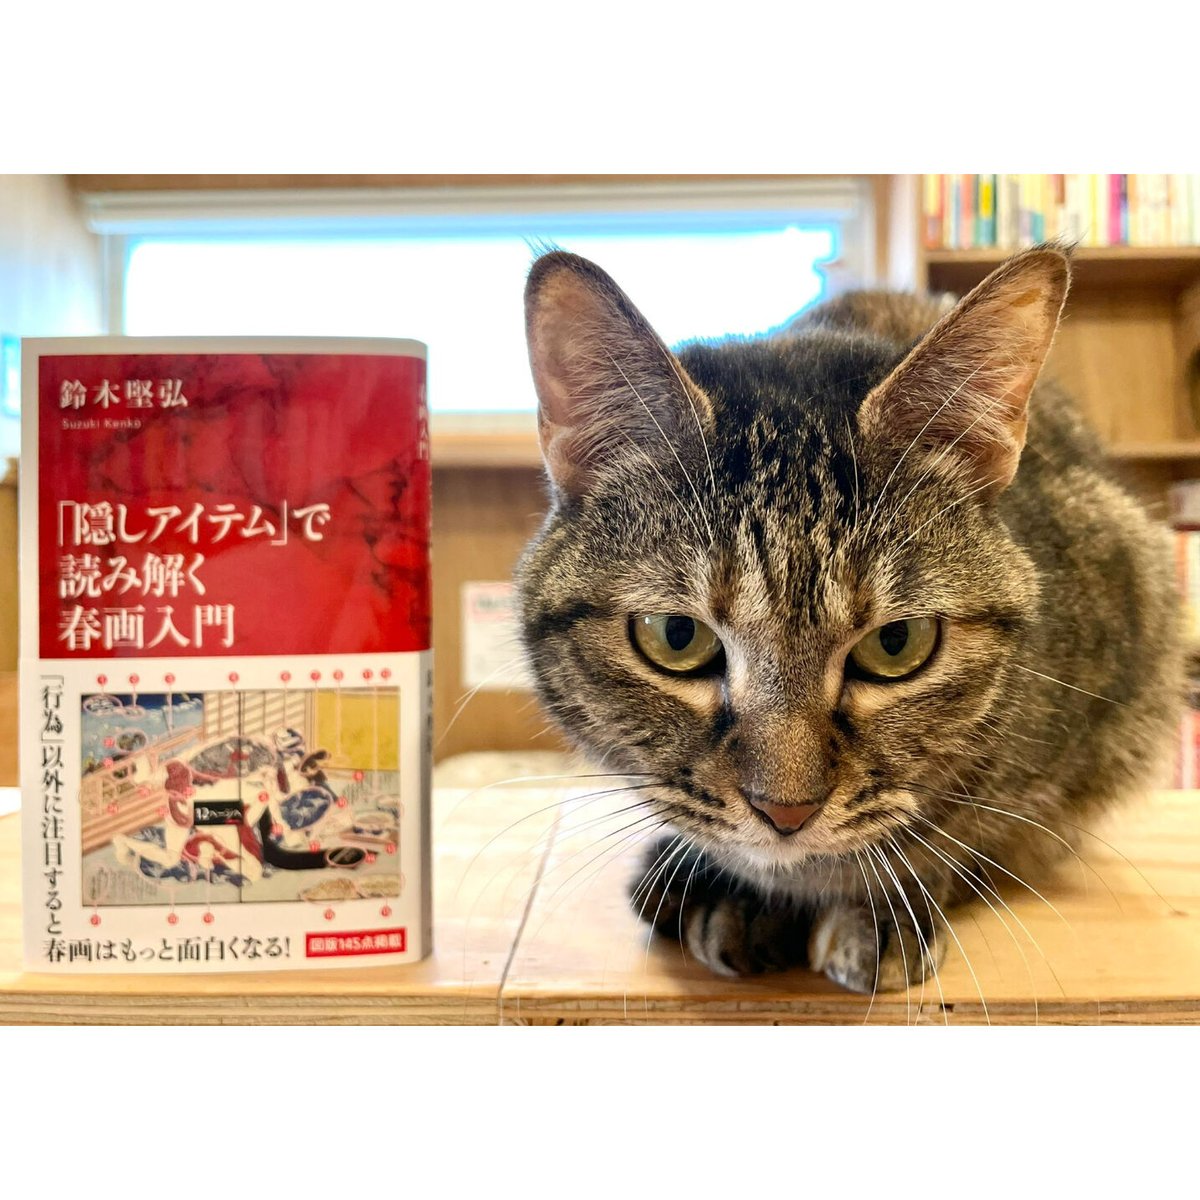 Virtual　Sh...　Meow　Cat's　隠しアイテム」で読み解く春画入門　Books